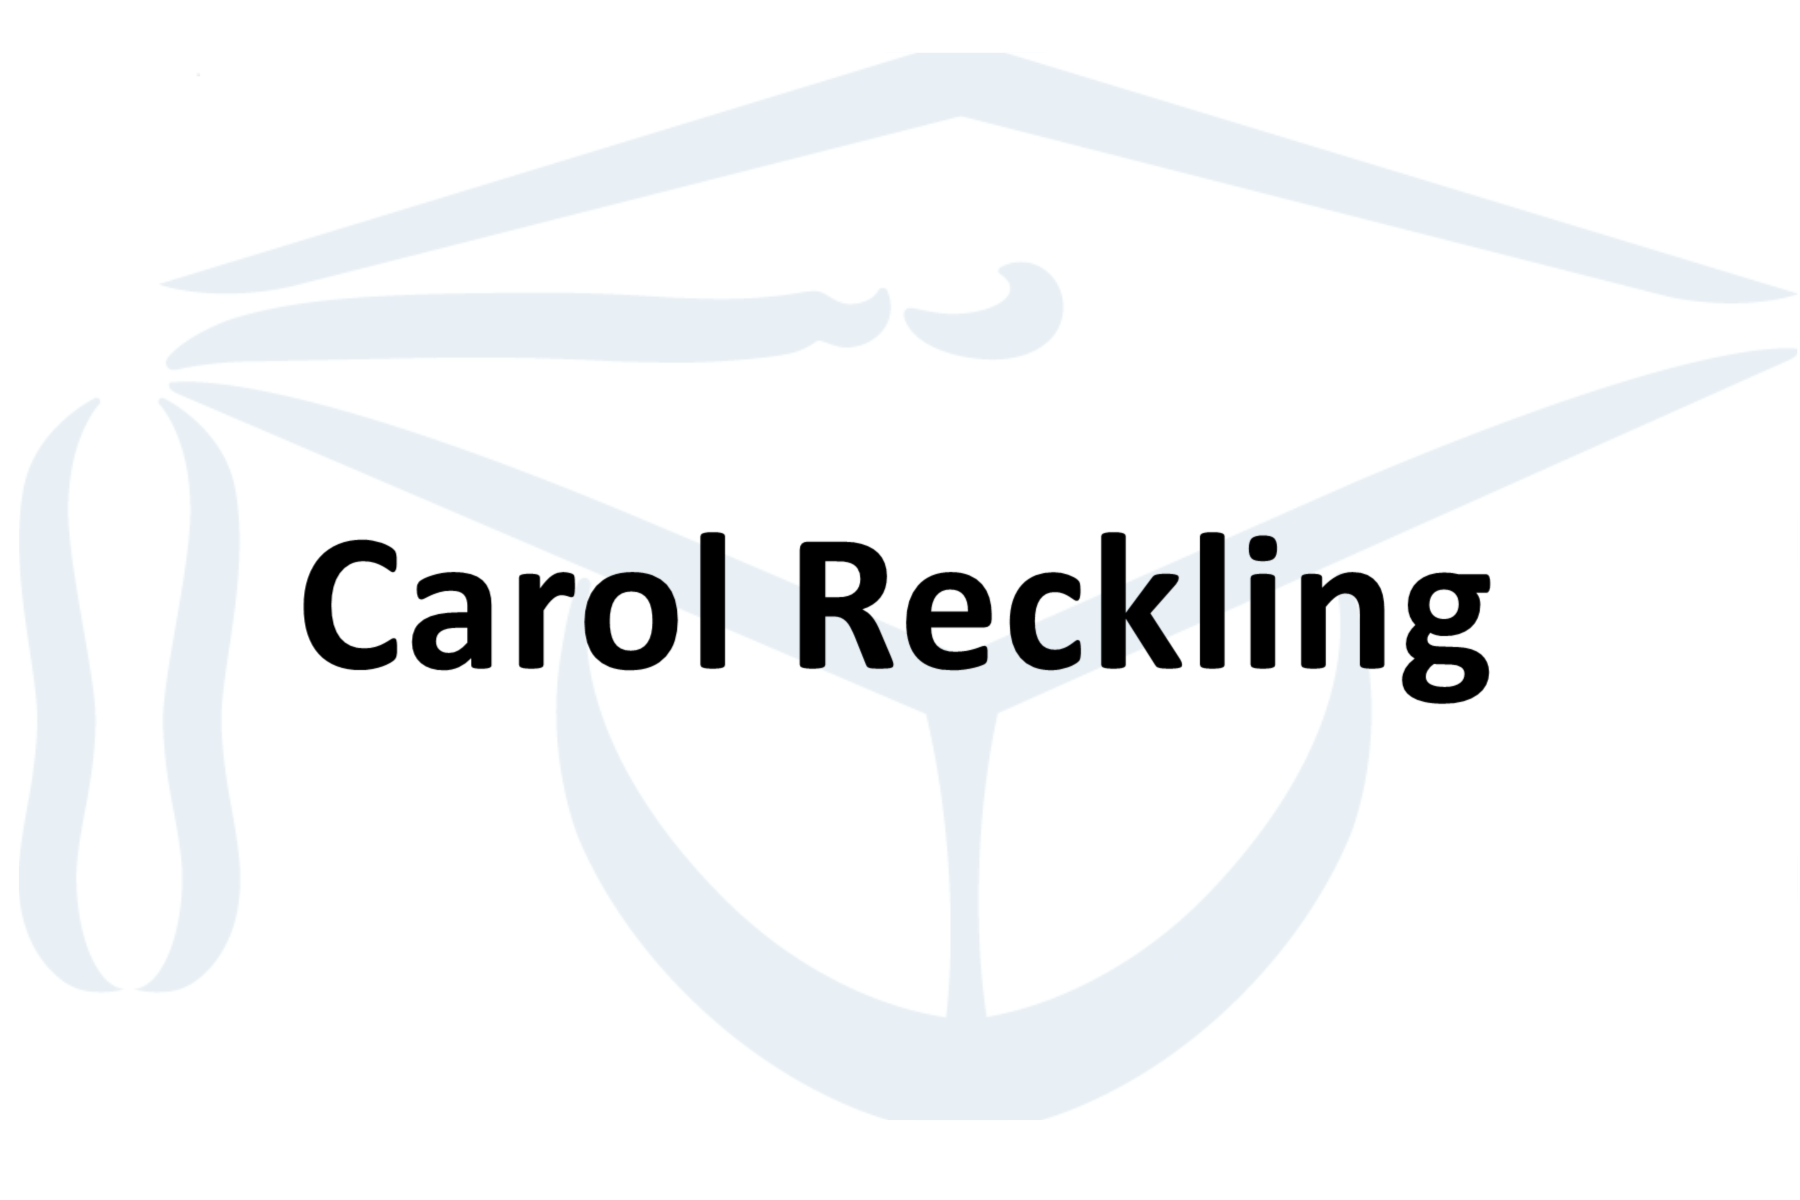 Carol Reckling